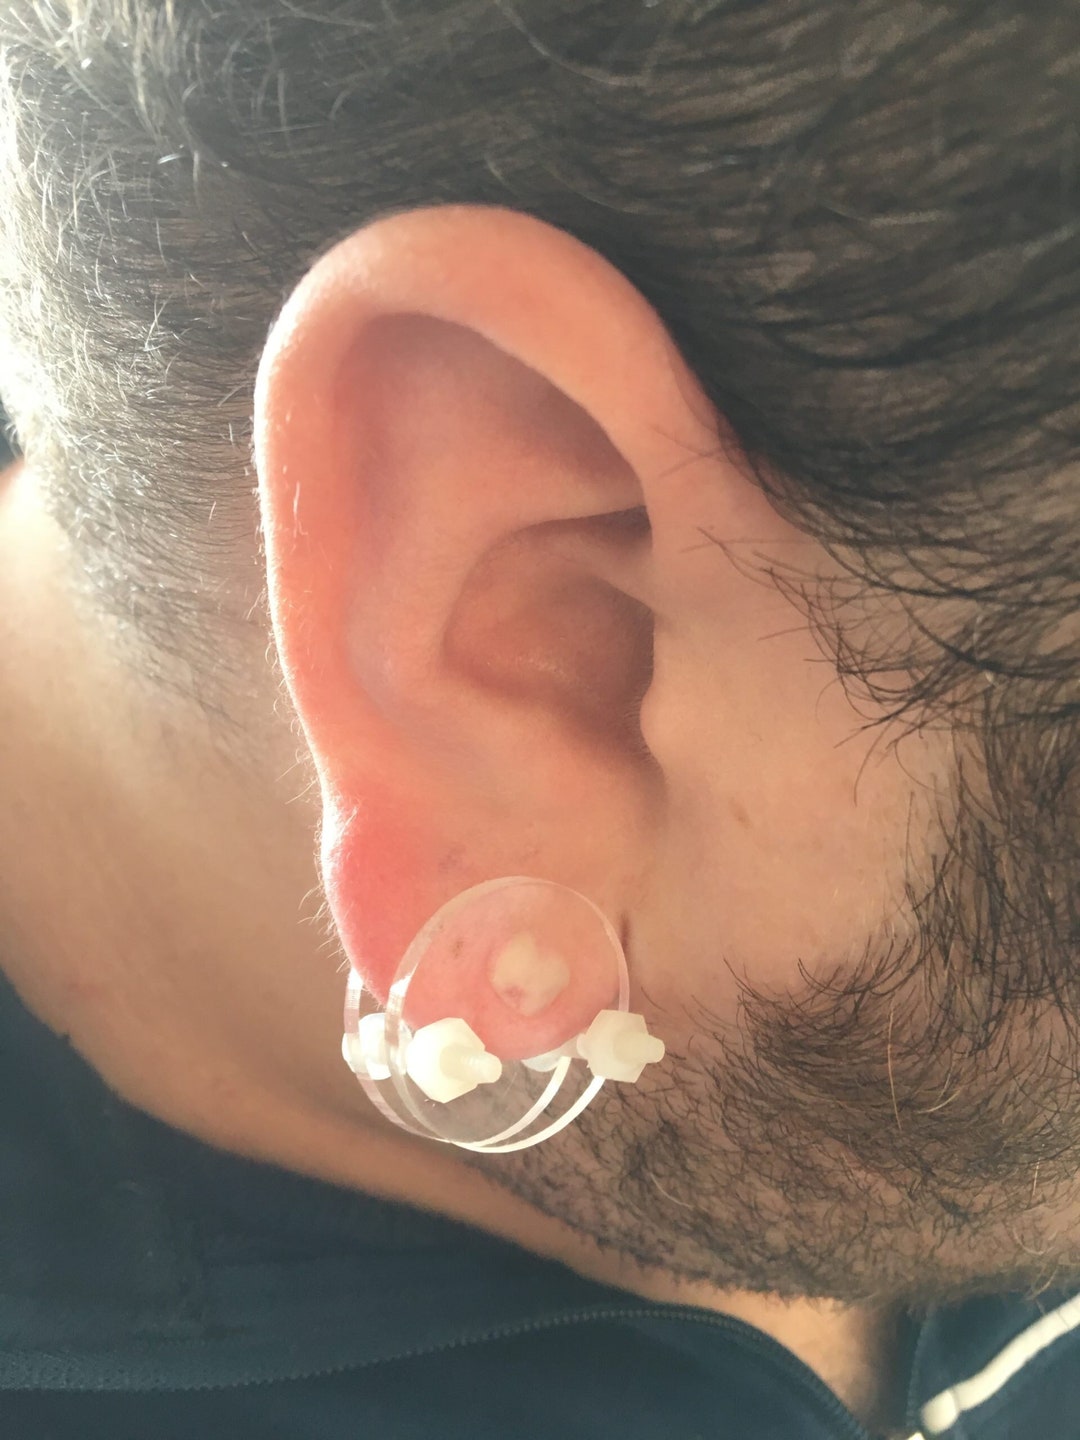 Amazoncom Hujiling Pressure Earring for Keloid Keloid Earrings Pressure  Clip Compression Earrings for Keloids Stainless Steel Spiral Nonpierced  Earrings Cartilage Helix Wrap Ear Jewelry Set Black Clothing Shoes   Jewelry